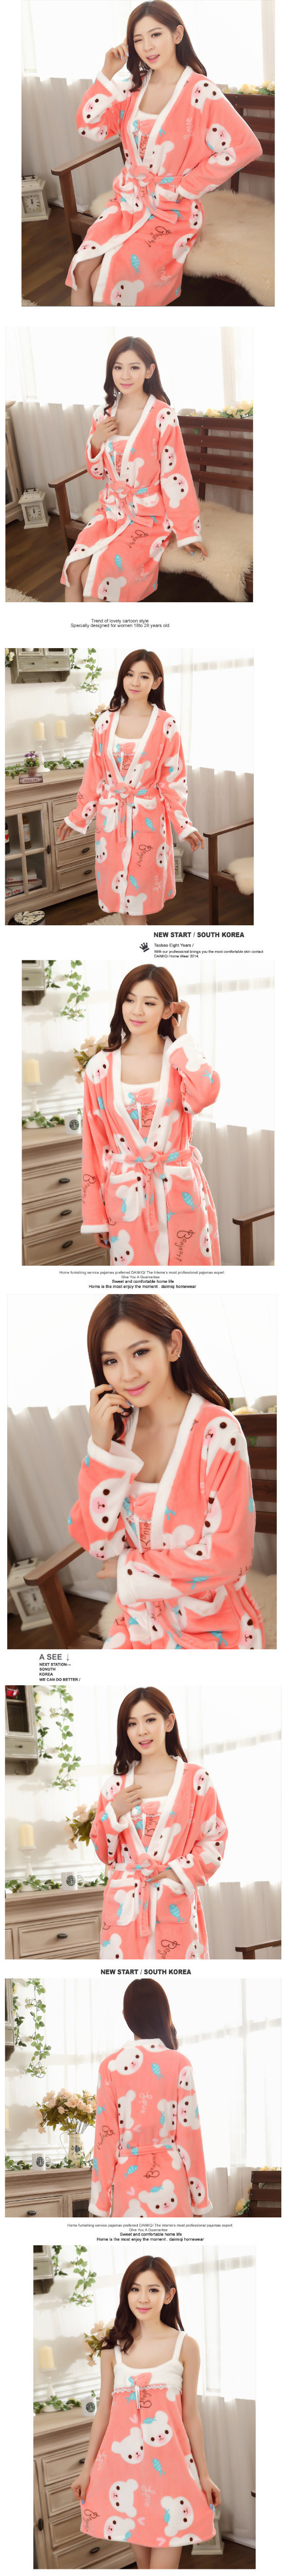 Hot 2015 New Autumn Thick Warm Section Women Cute Cartoon Dot Long Sleeve Pajamas Sleepwear_7